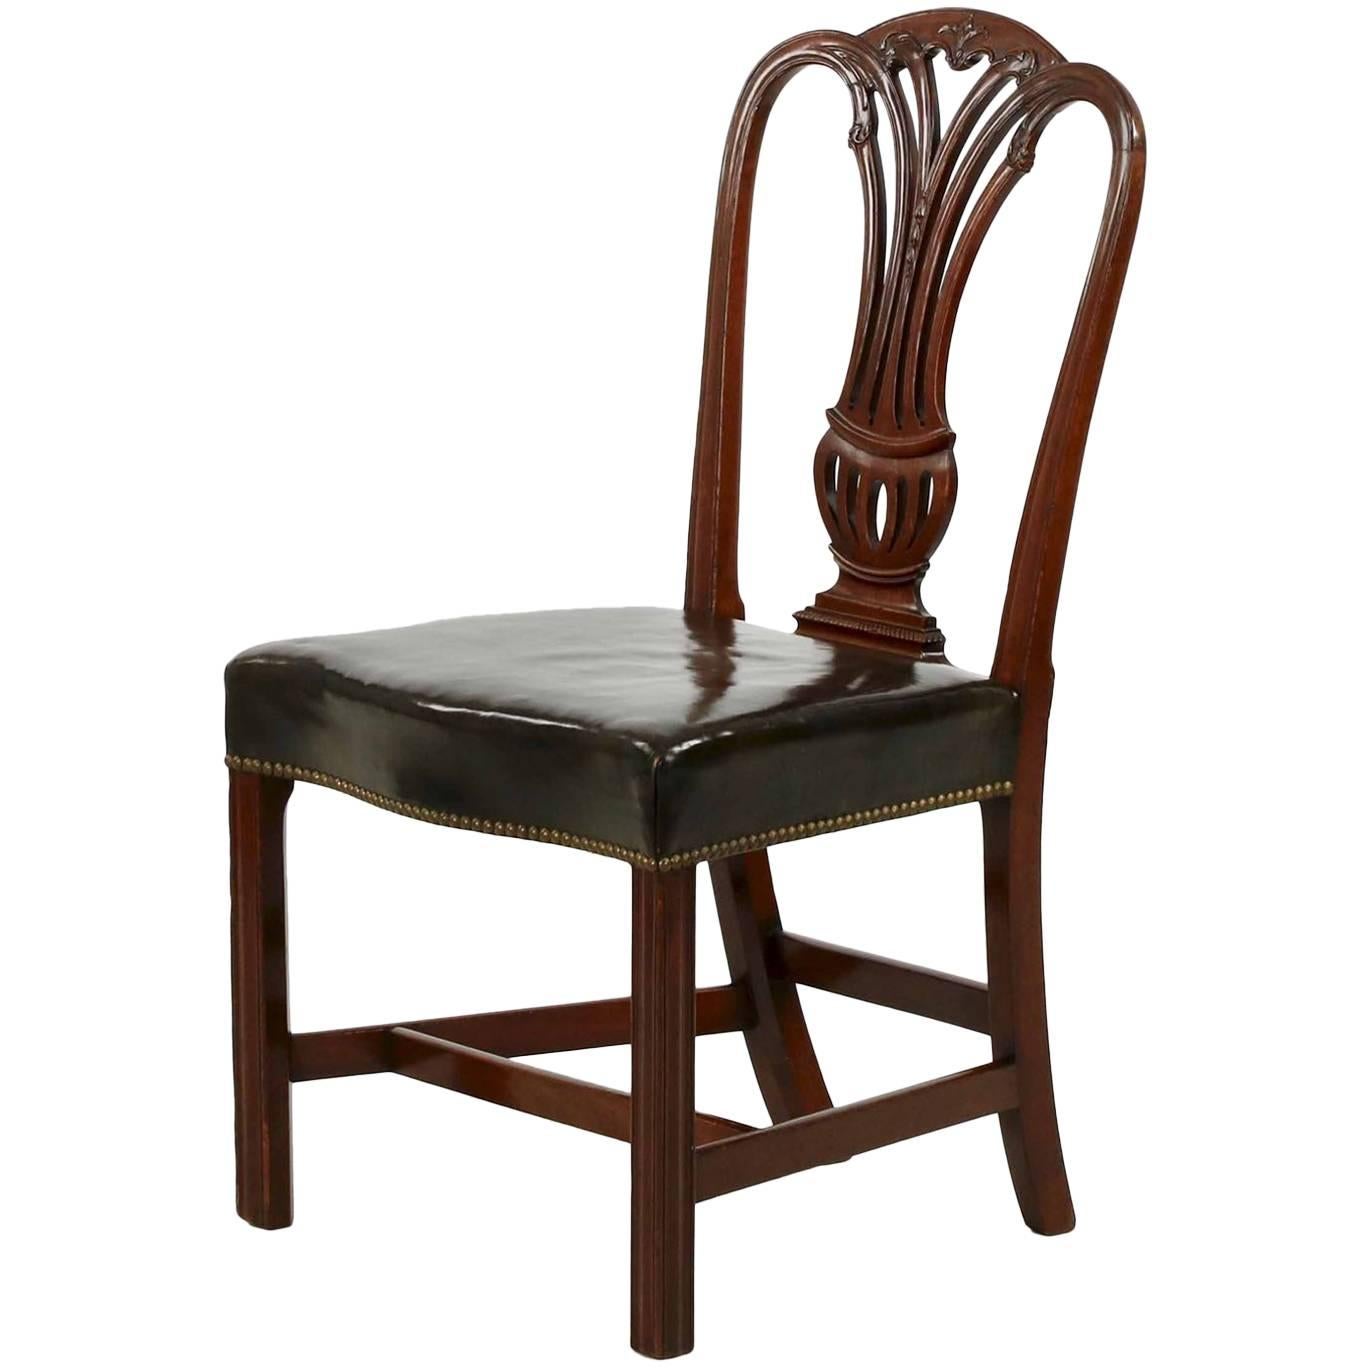 English Georgian Period Antique Mahogany Side Chair, Late 18th Century